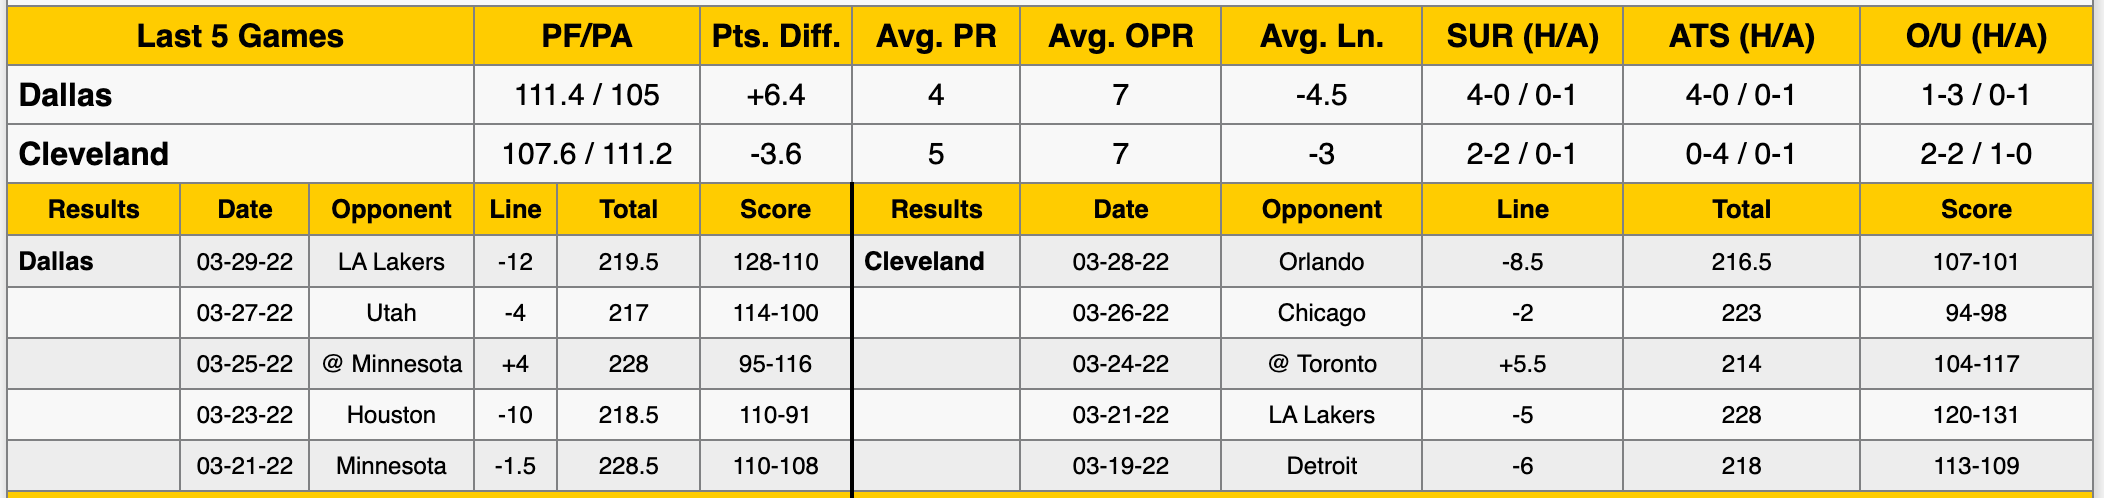 Cleveland Cavaliers vs Dallas Mavericks Data